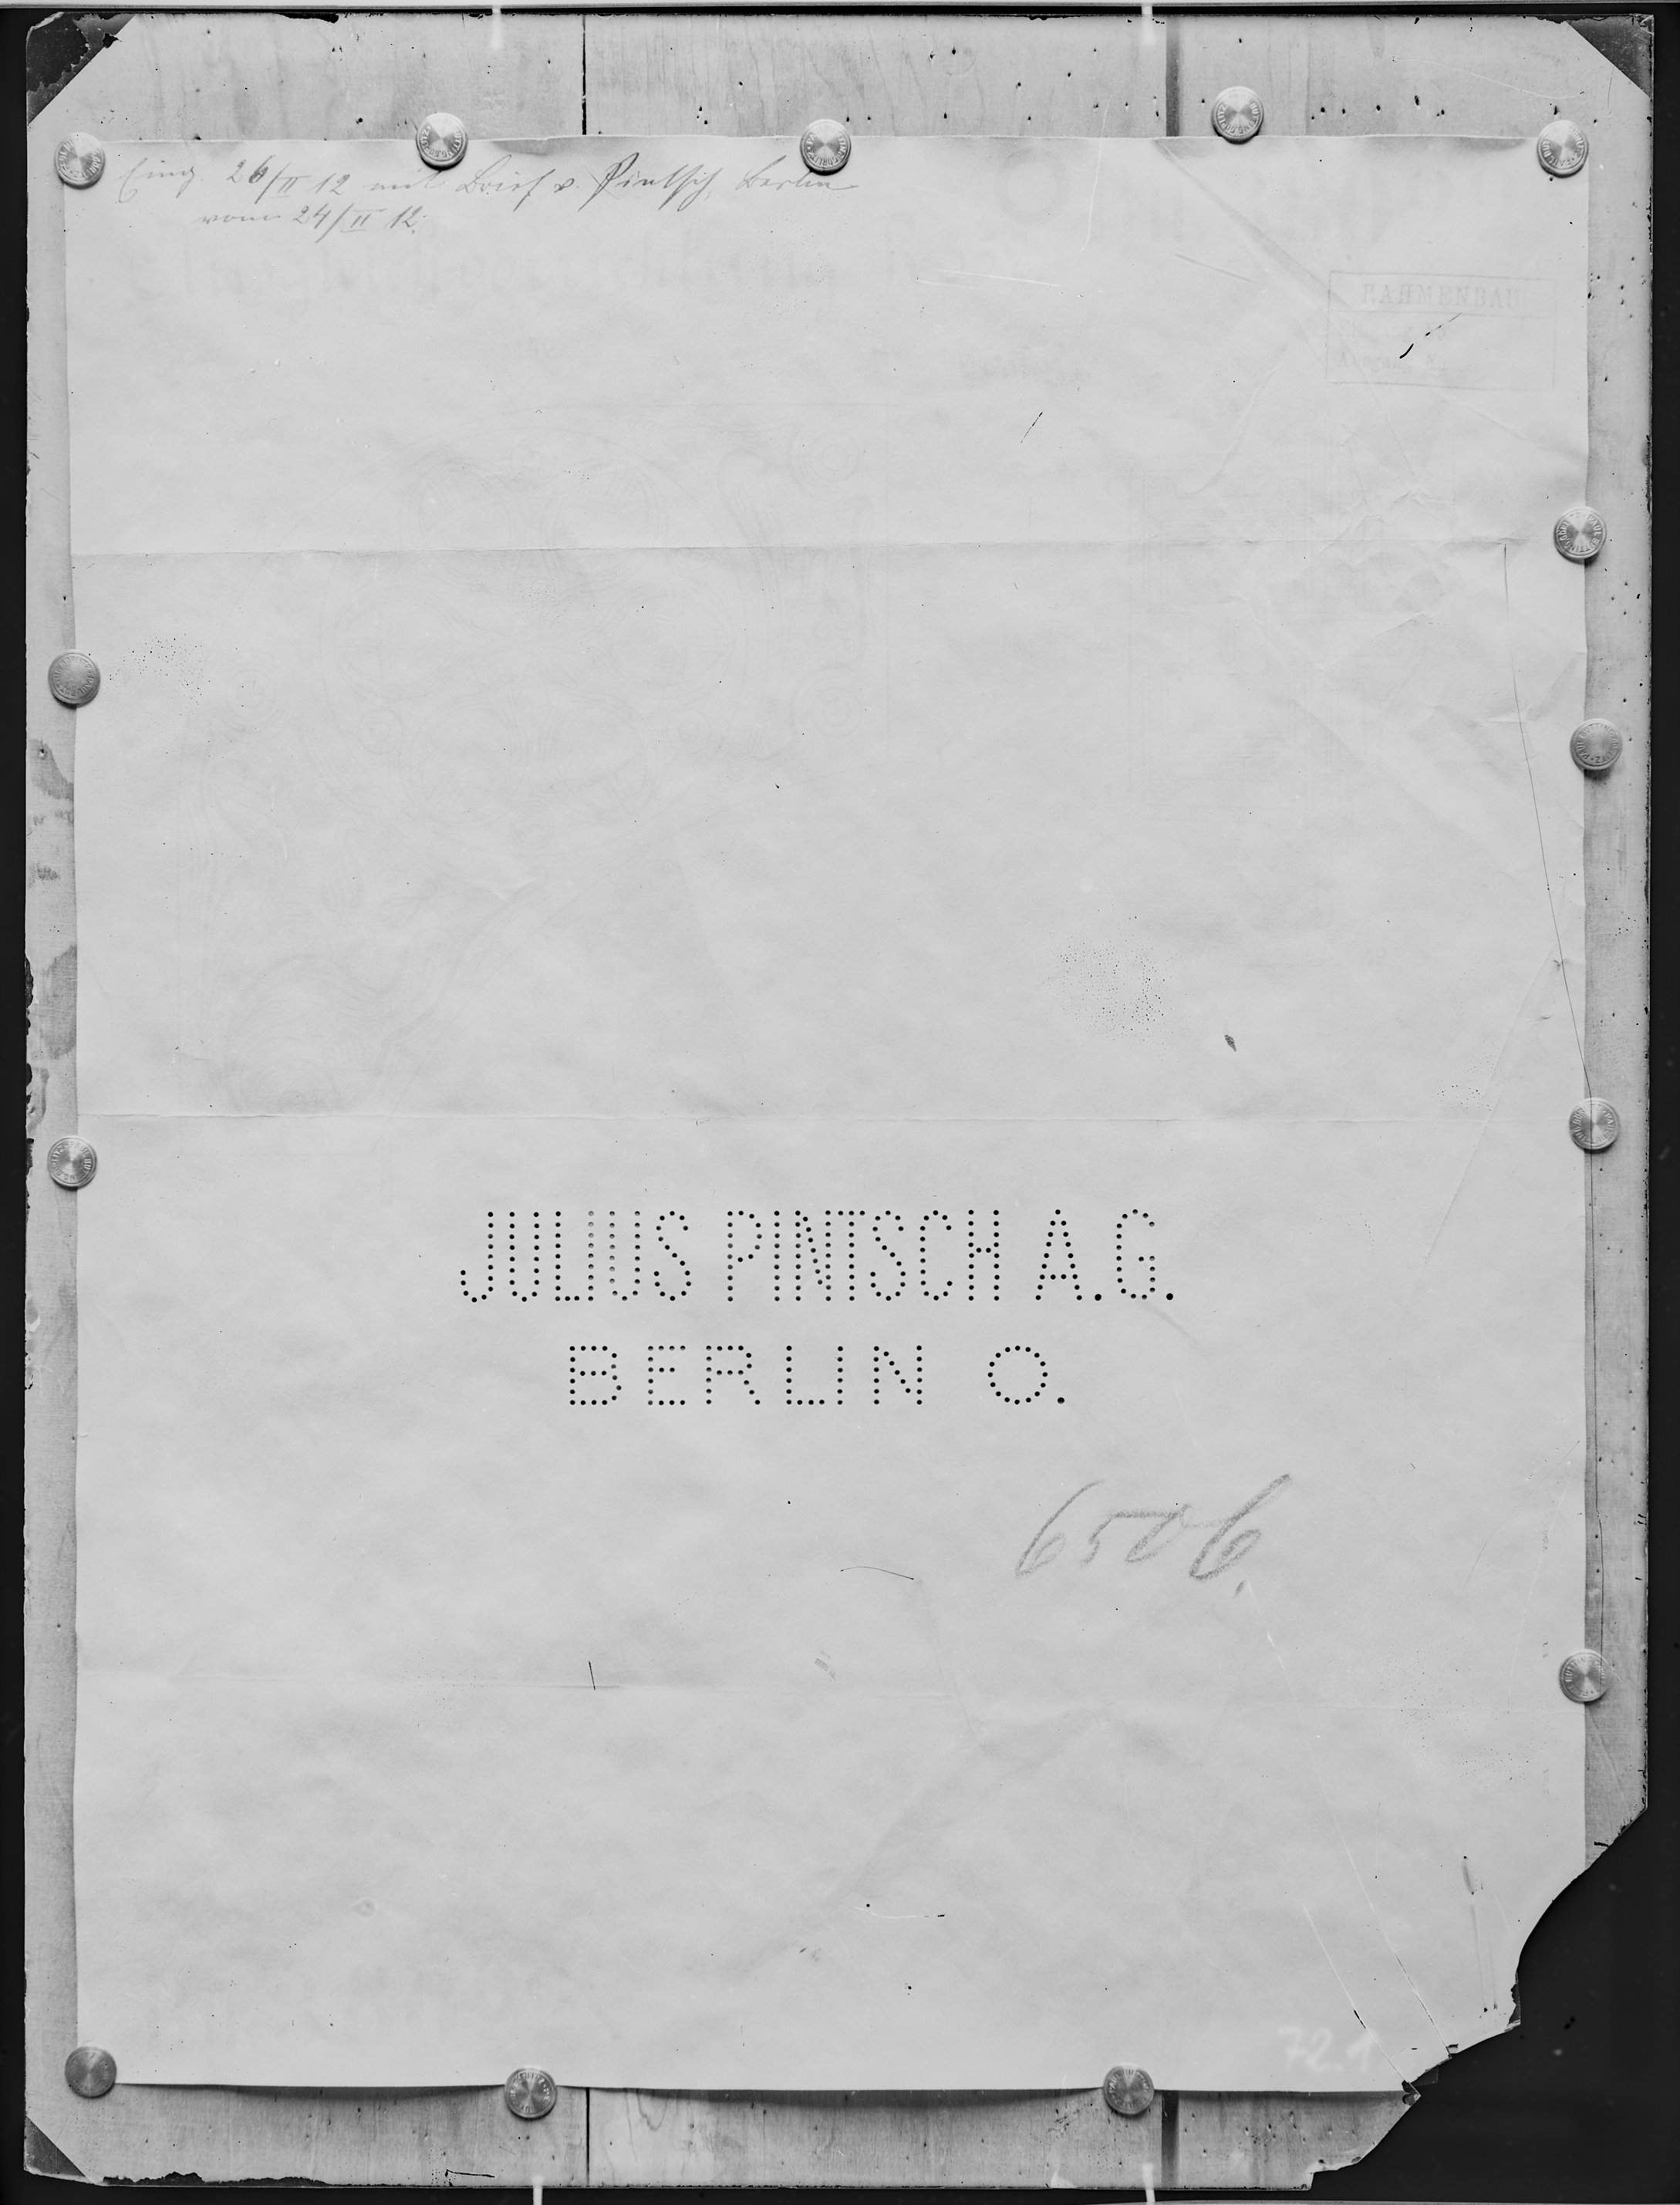 Fotografie: Deckblatt einer Firmenkorrespondenz mit Firmennamen Julius Pintsch A.G., Berlin O. in Lochschrift, 1912. (Verkehrsmuseum Dresden CC BY-NC-SA)